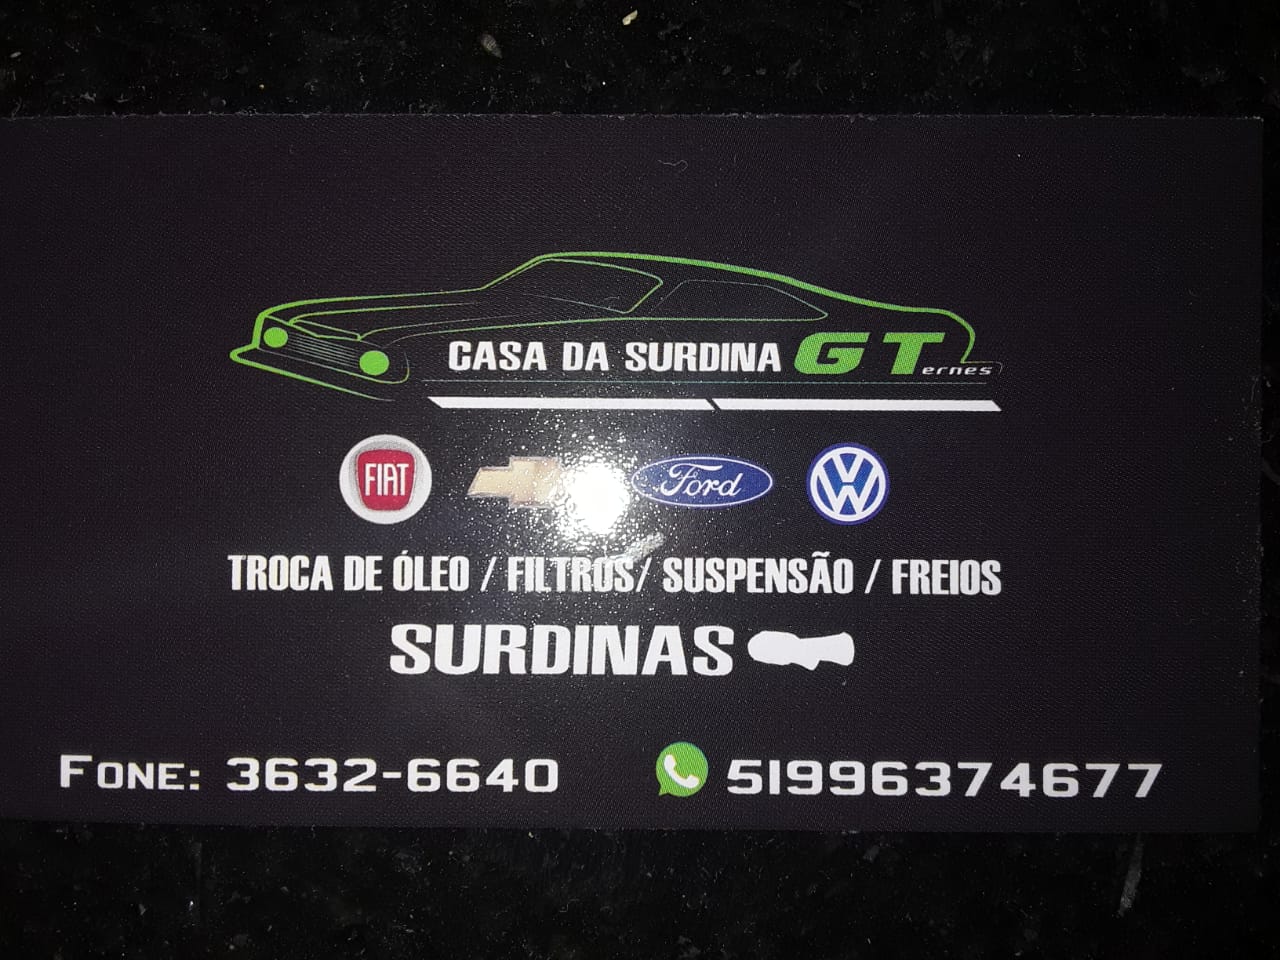 CASA DA SURDINA GT Logomarca